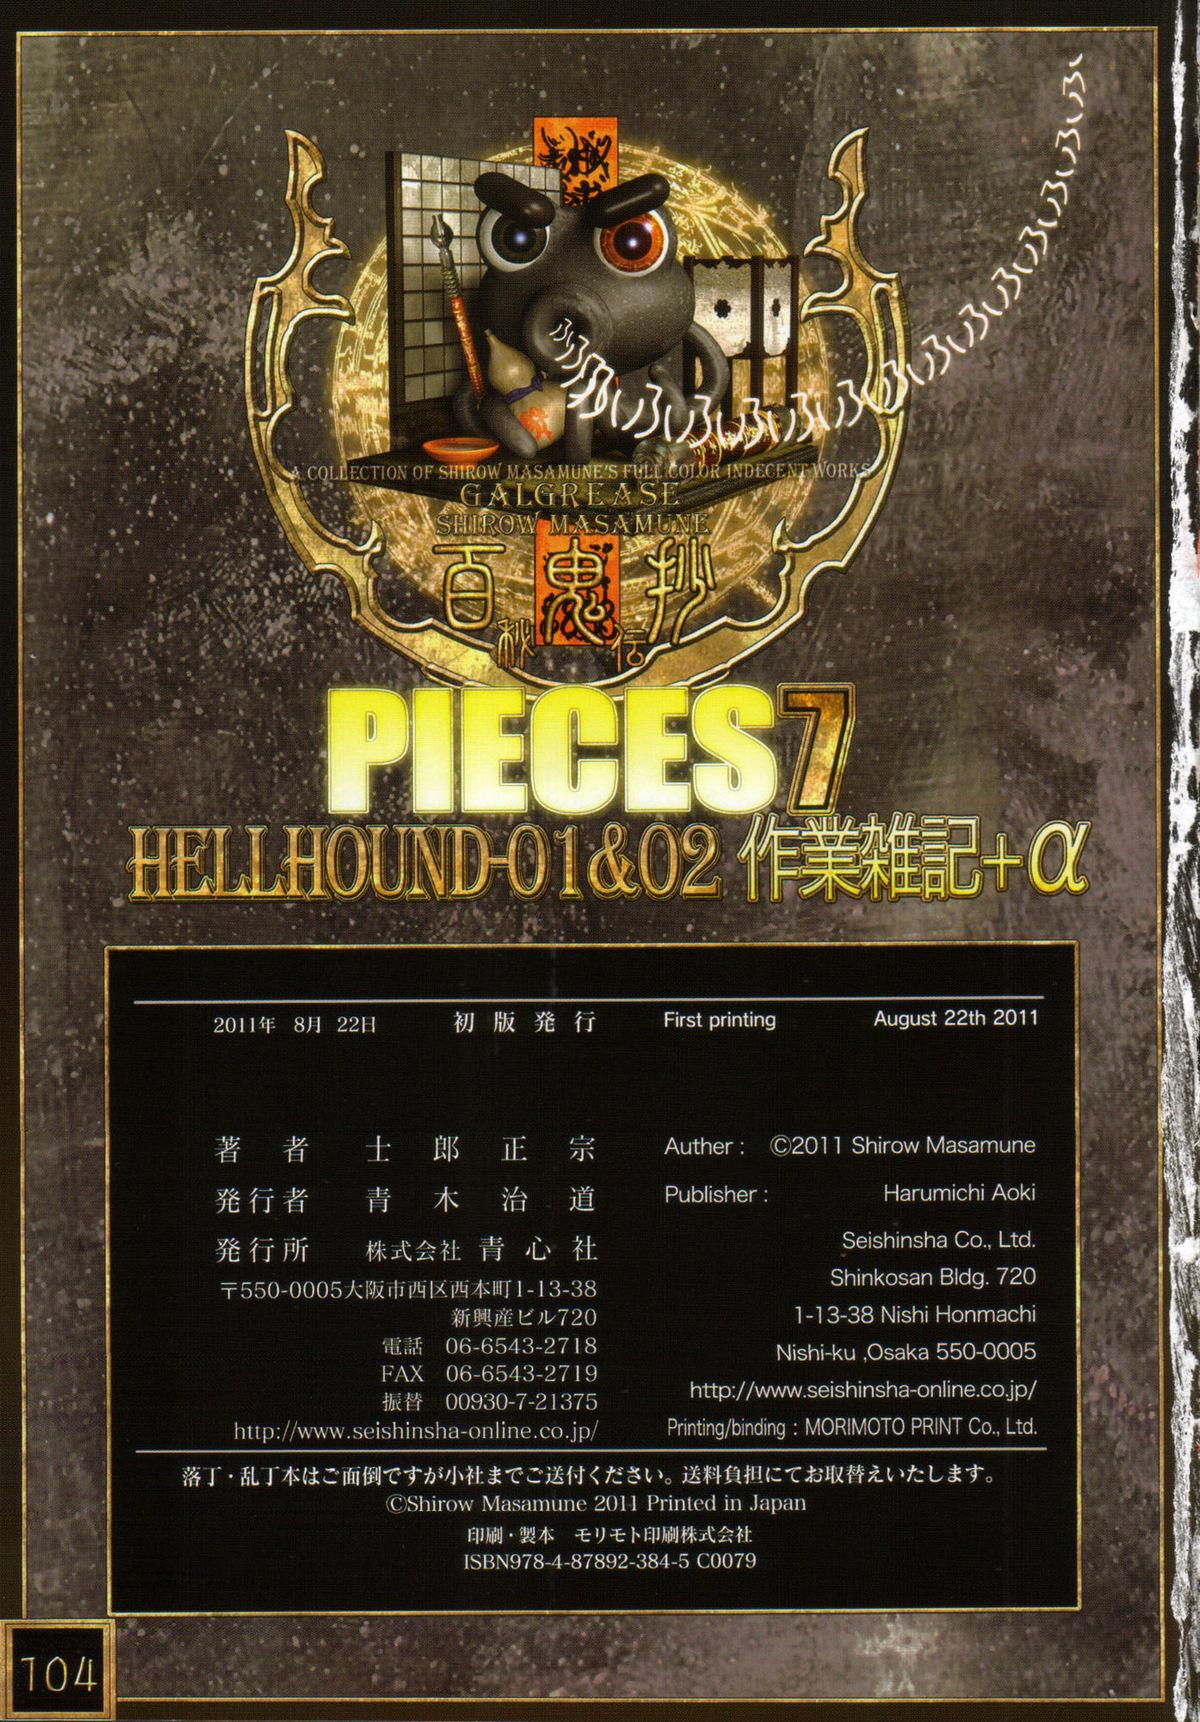 PIECES 7 HELL HOUND 01&02 Sagyousakkai + α 109